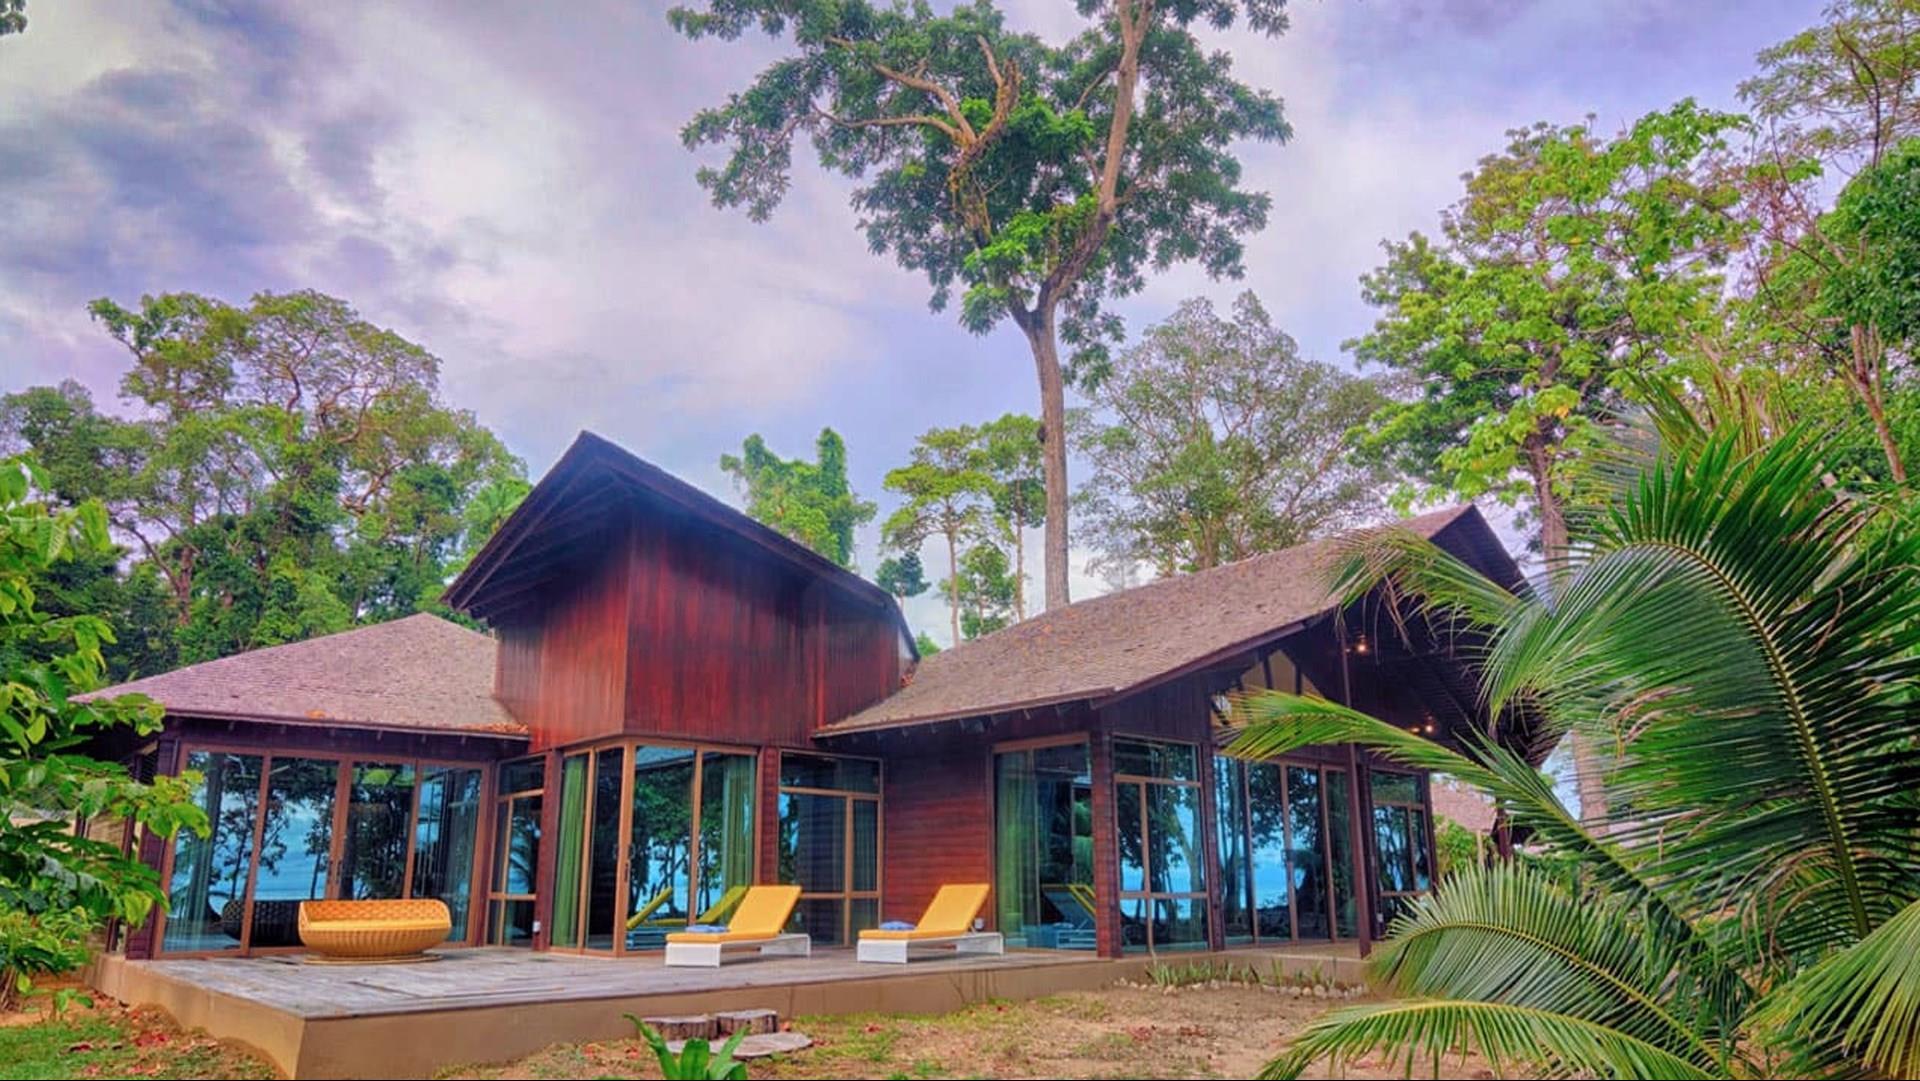 Borneo Eagle Resort in Kota Kinabalu, MY